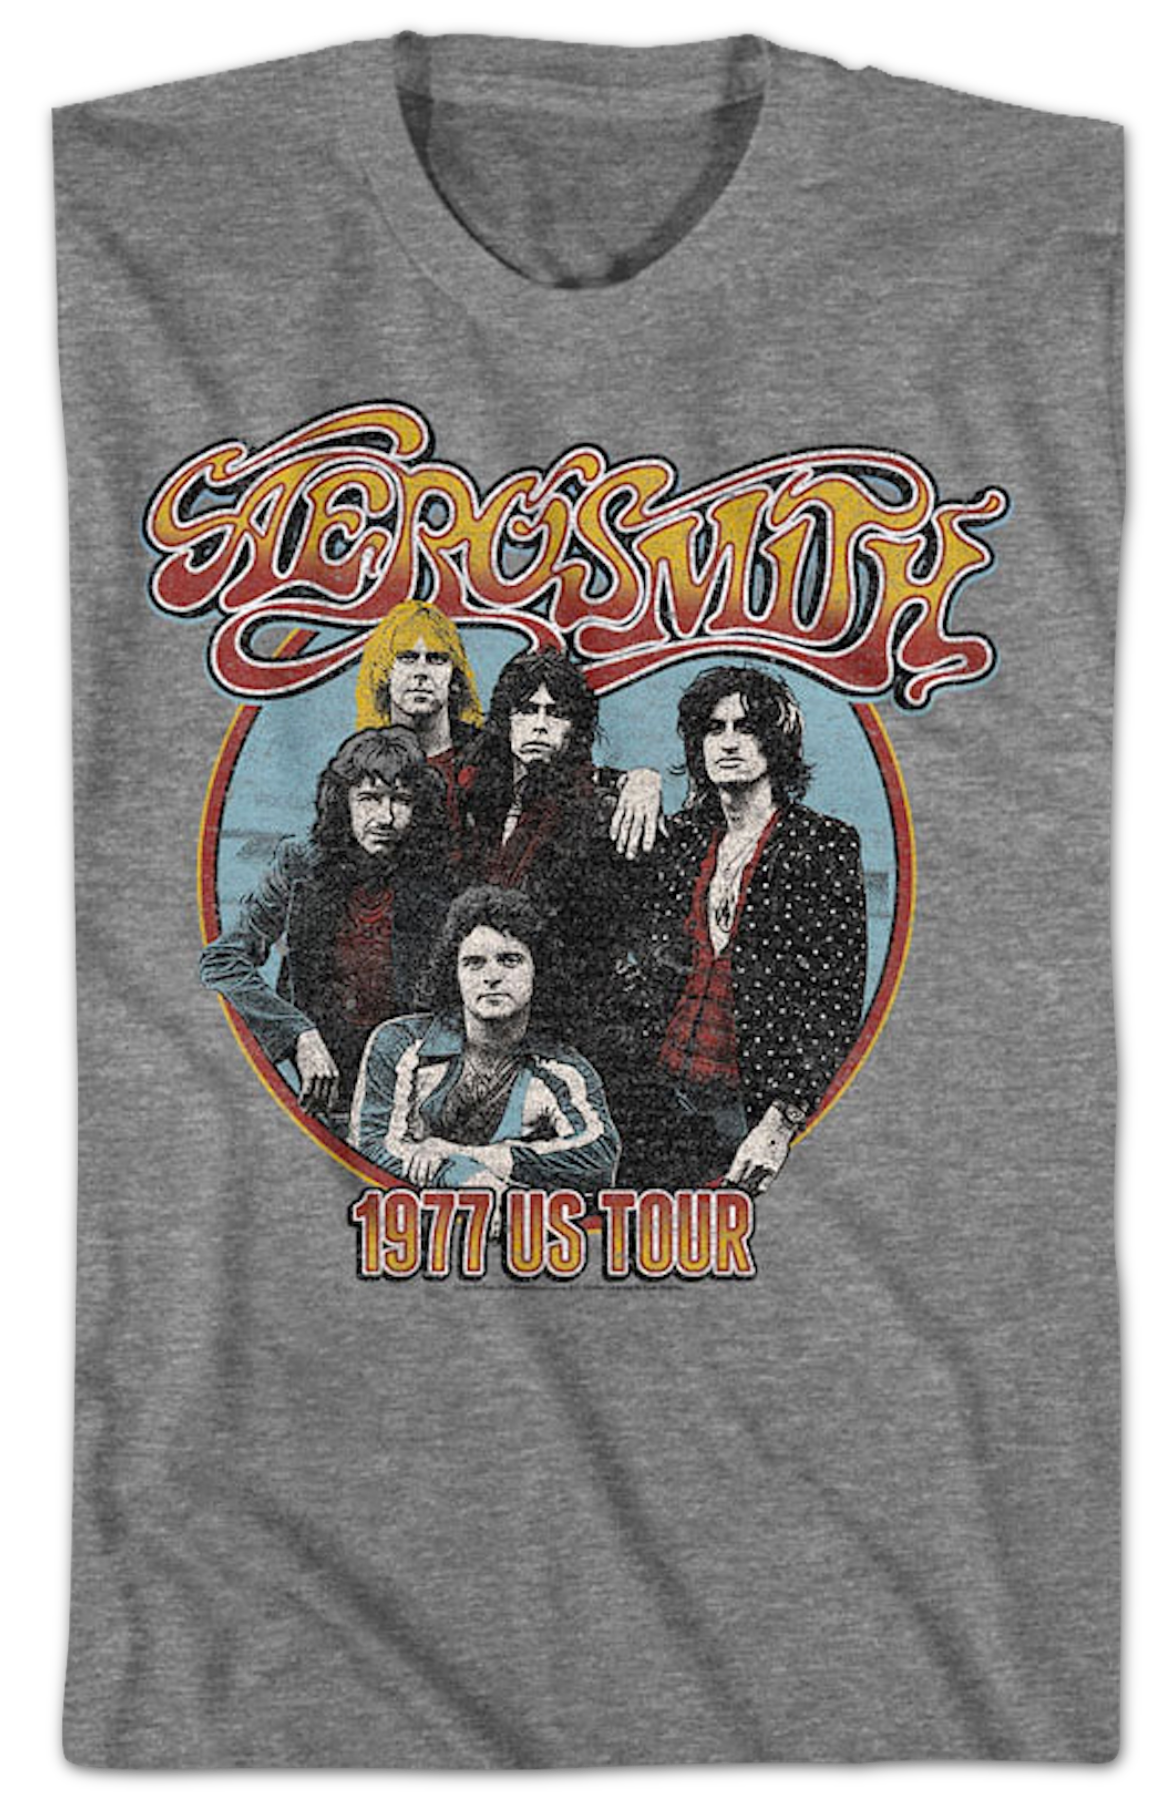 1977 US Tour T-Shirt Aerosmith